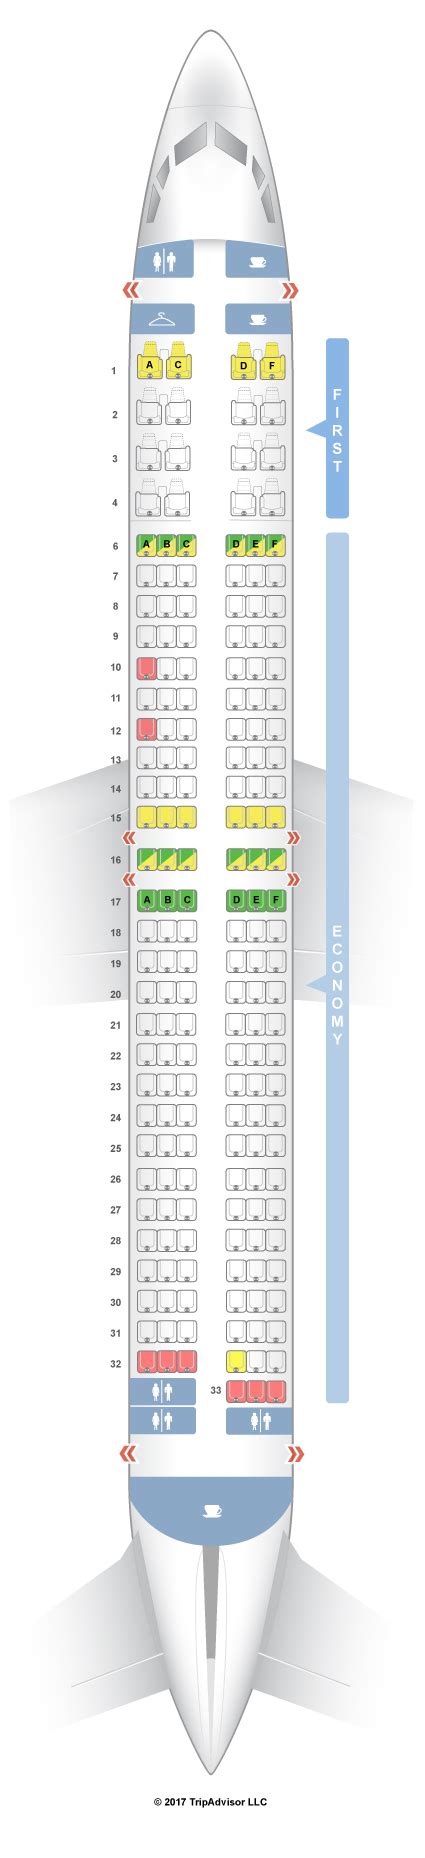 737 900 alaska seat map. 17. 18 standard seats. Economy. 31-32. 17. 171 standard seats. Boeing 737-900ER (73J) Layout 1. (Most Common) 